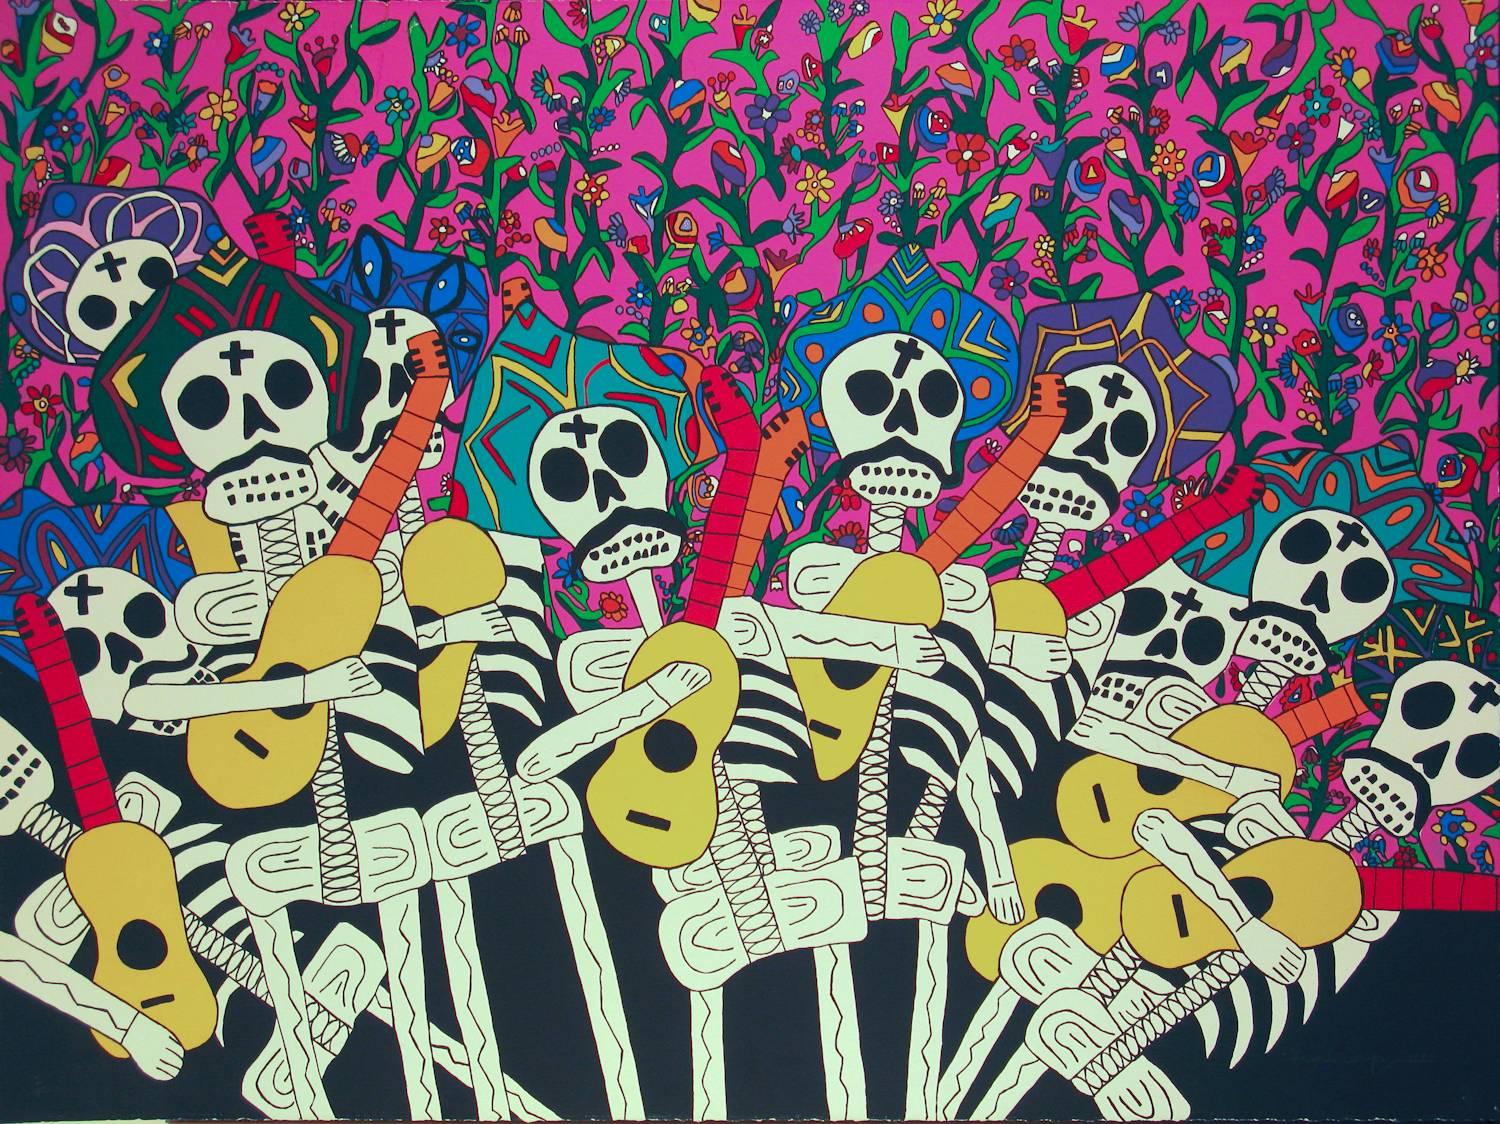 Hechale, Eduardo Oropeza, skeleton band, pink, red, white, black, day of the dead